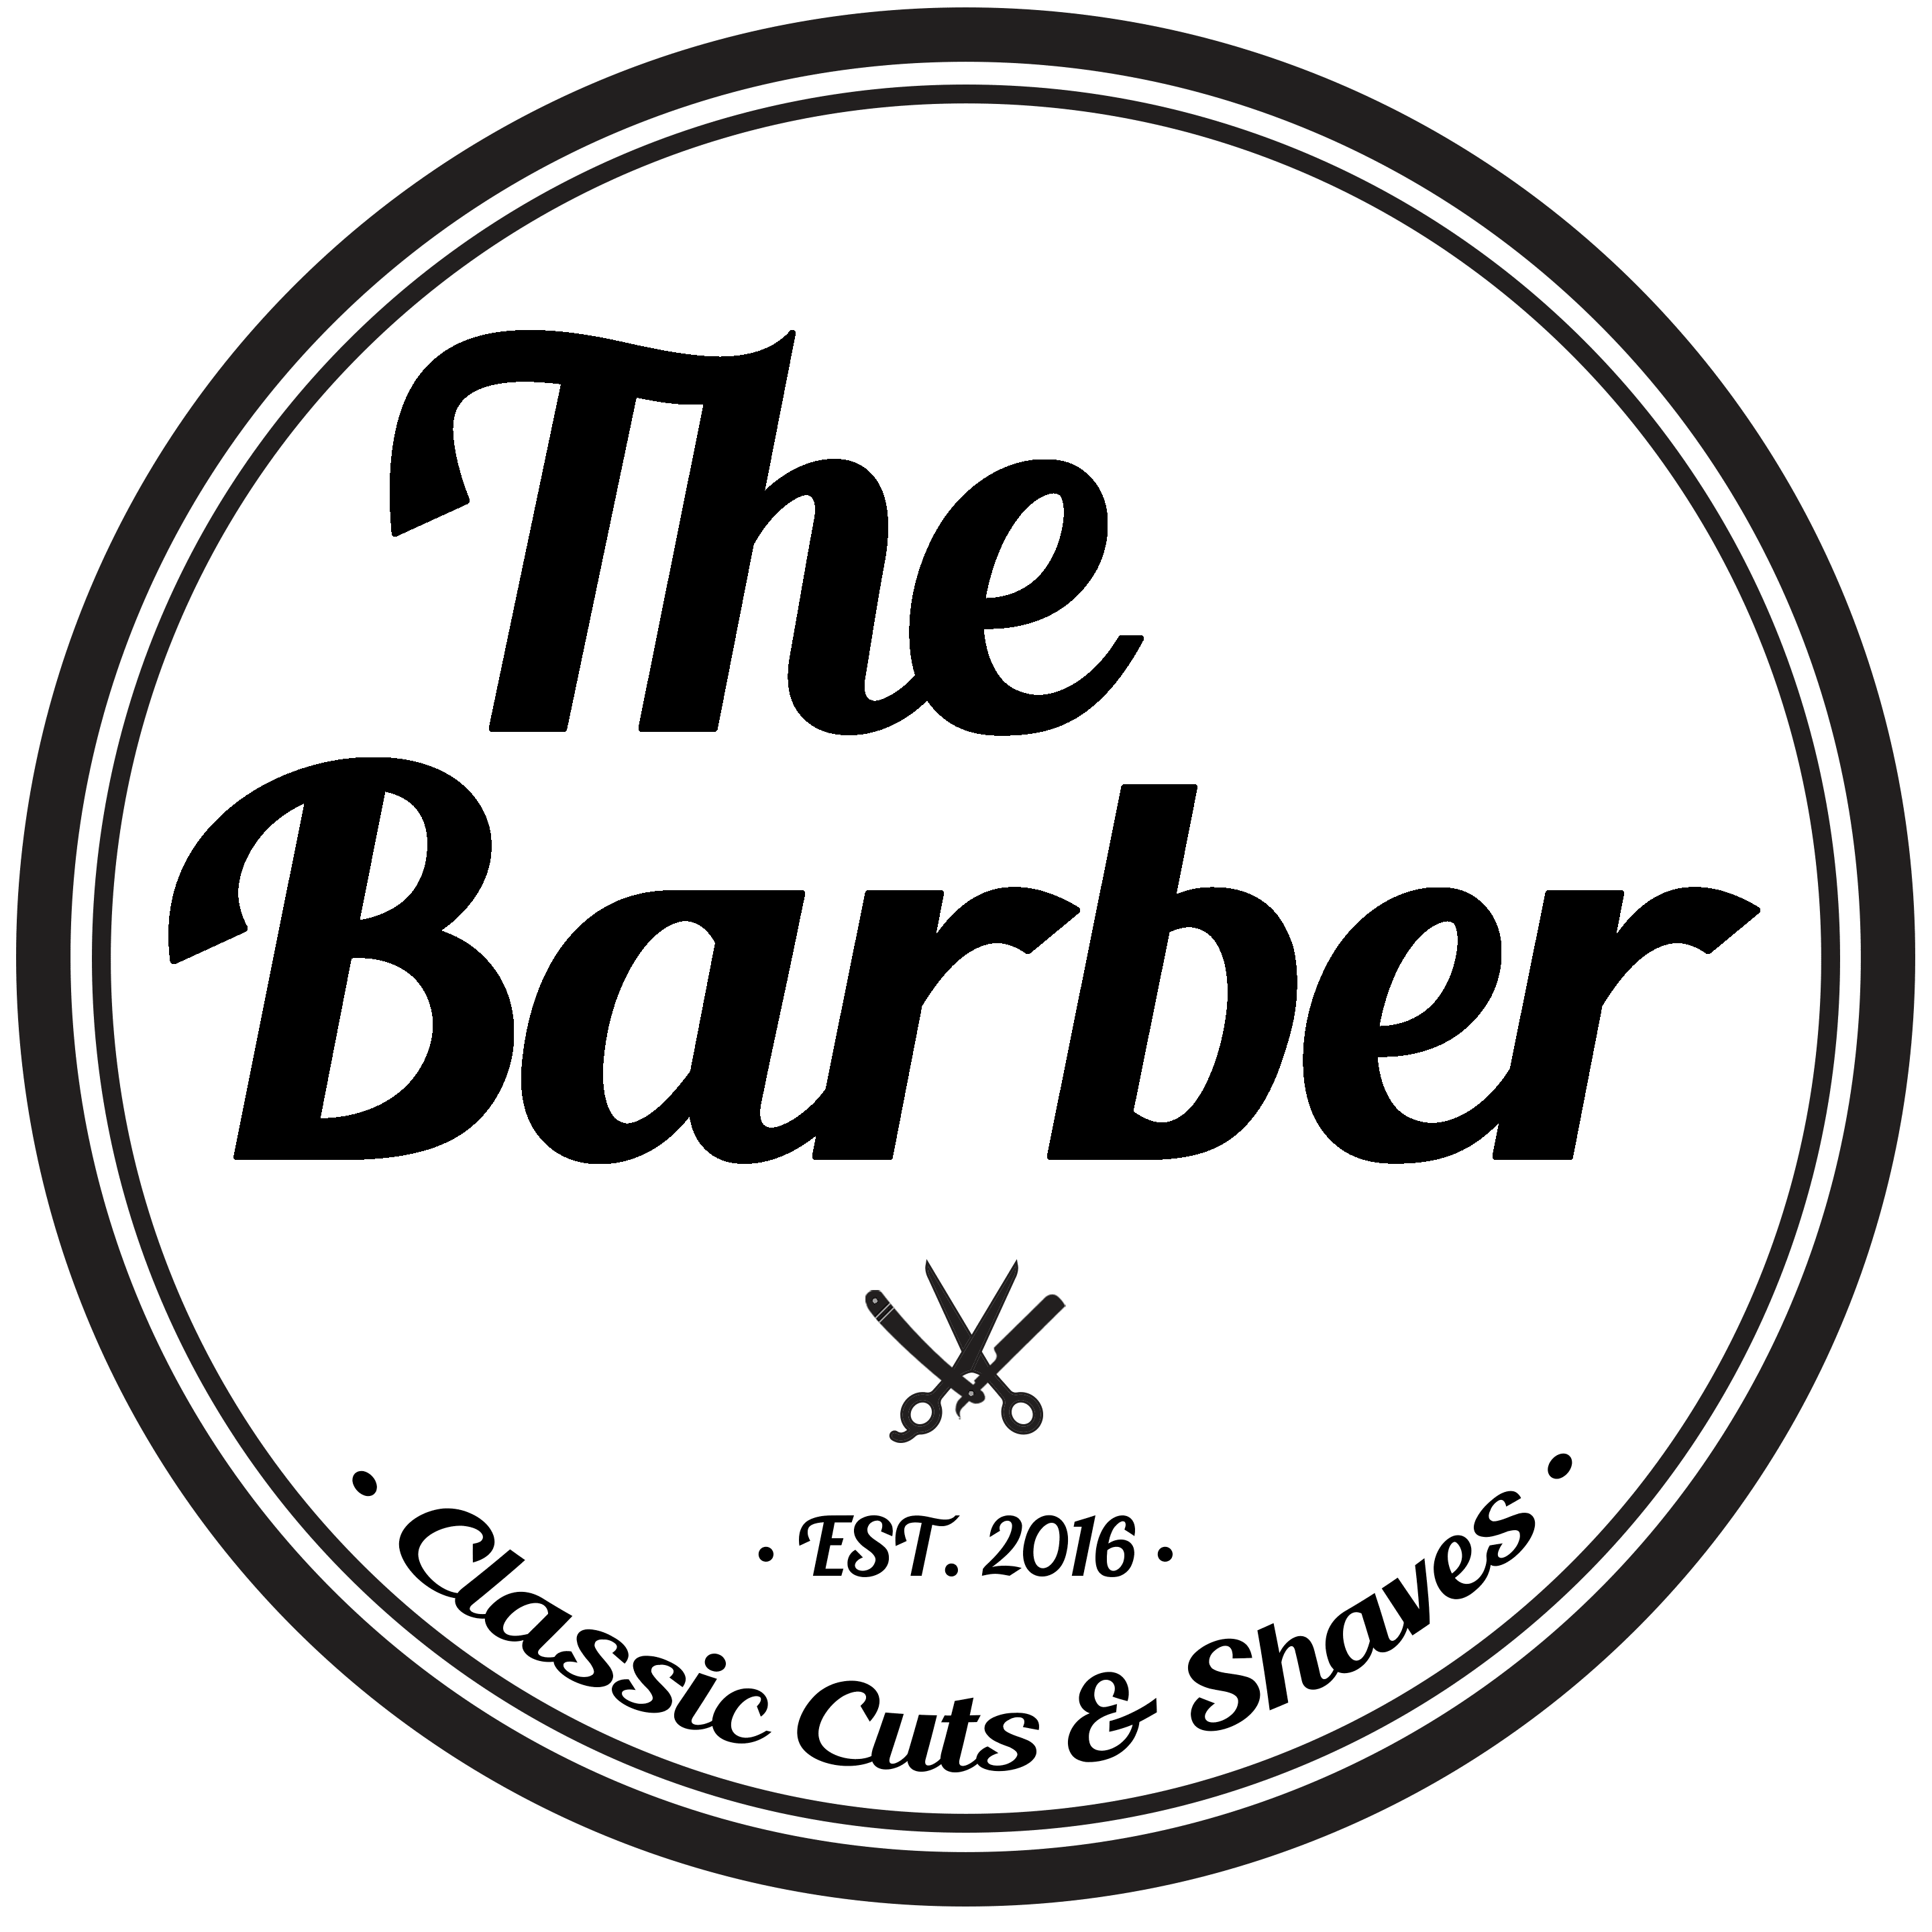 The barber logo at CitySide Apartments in Sarasota, Florida